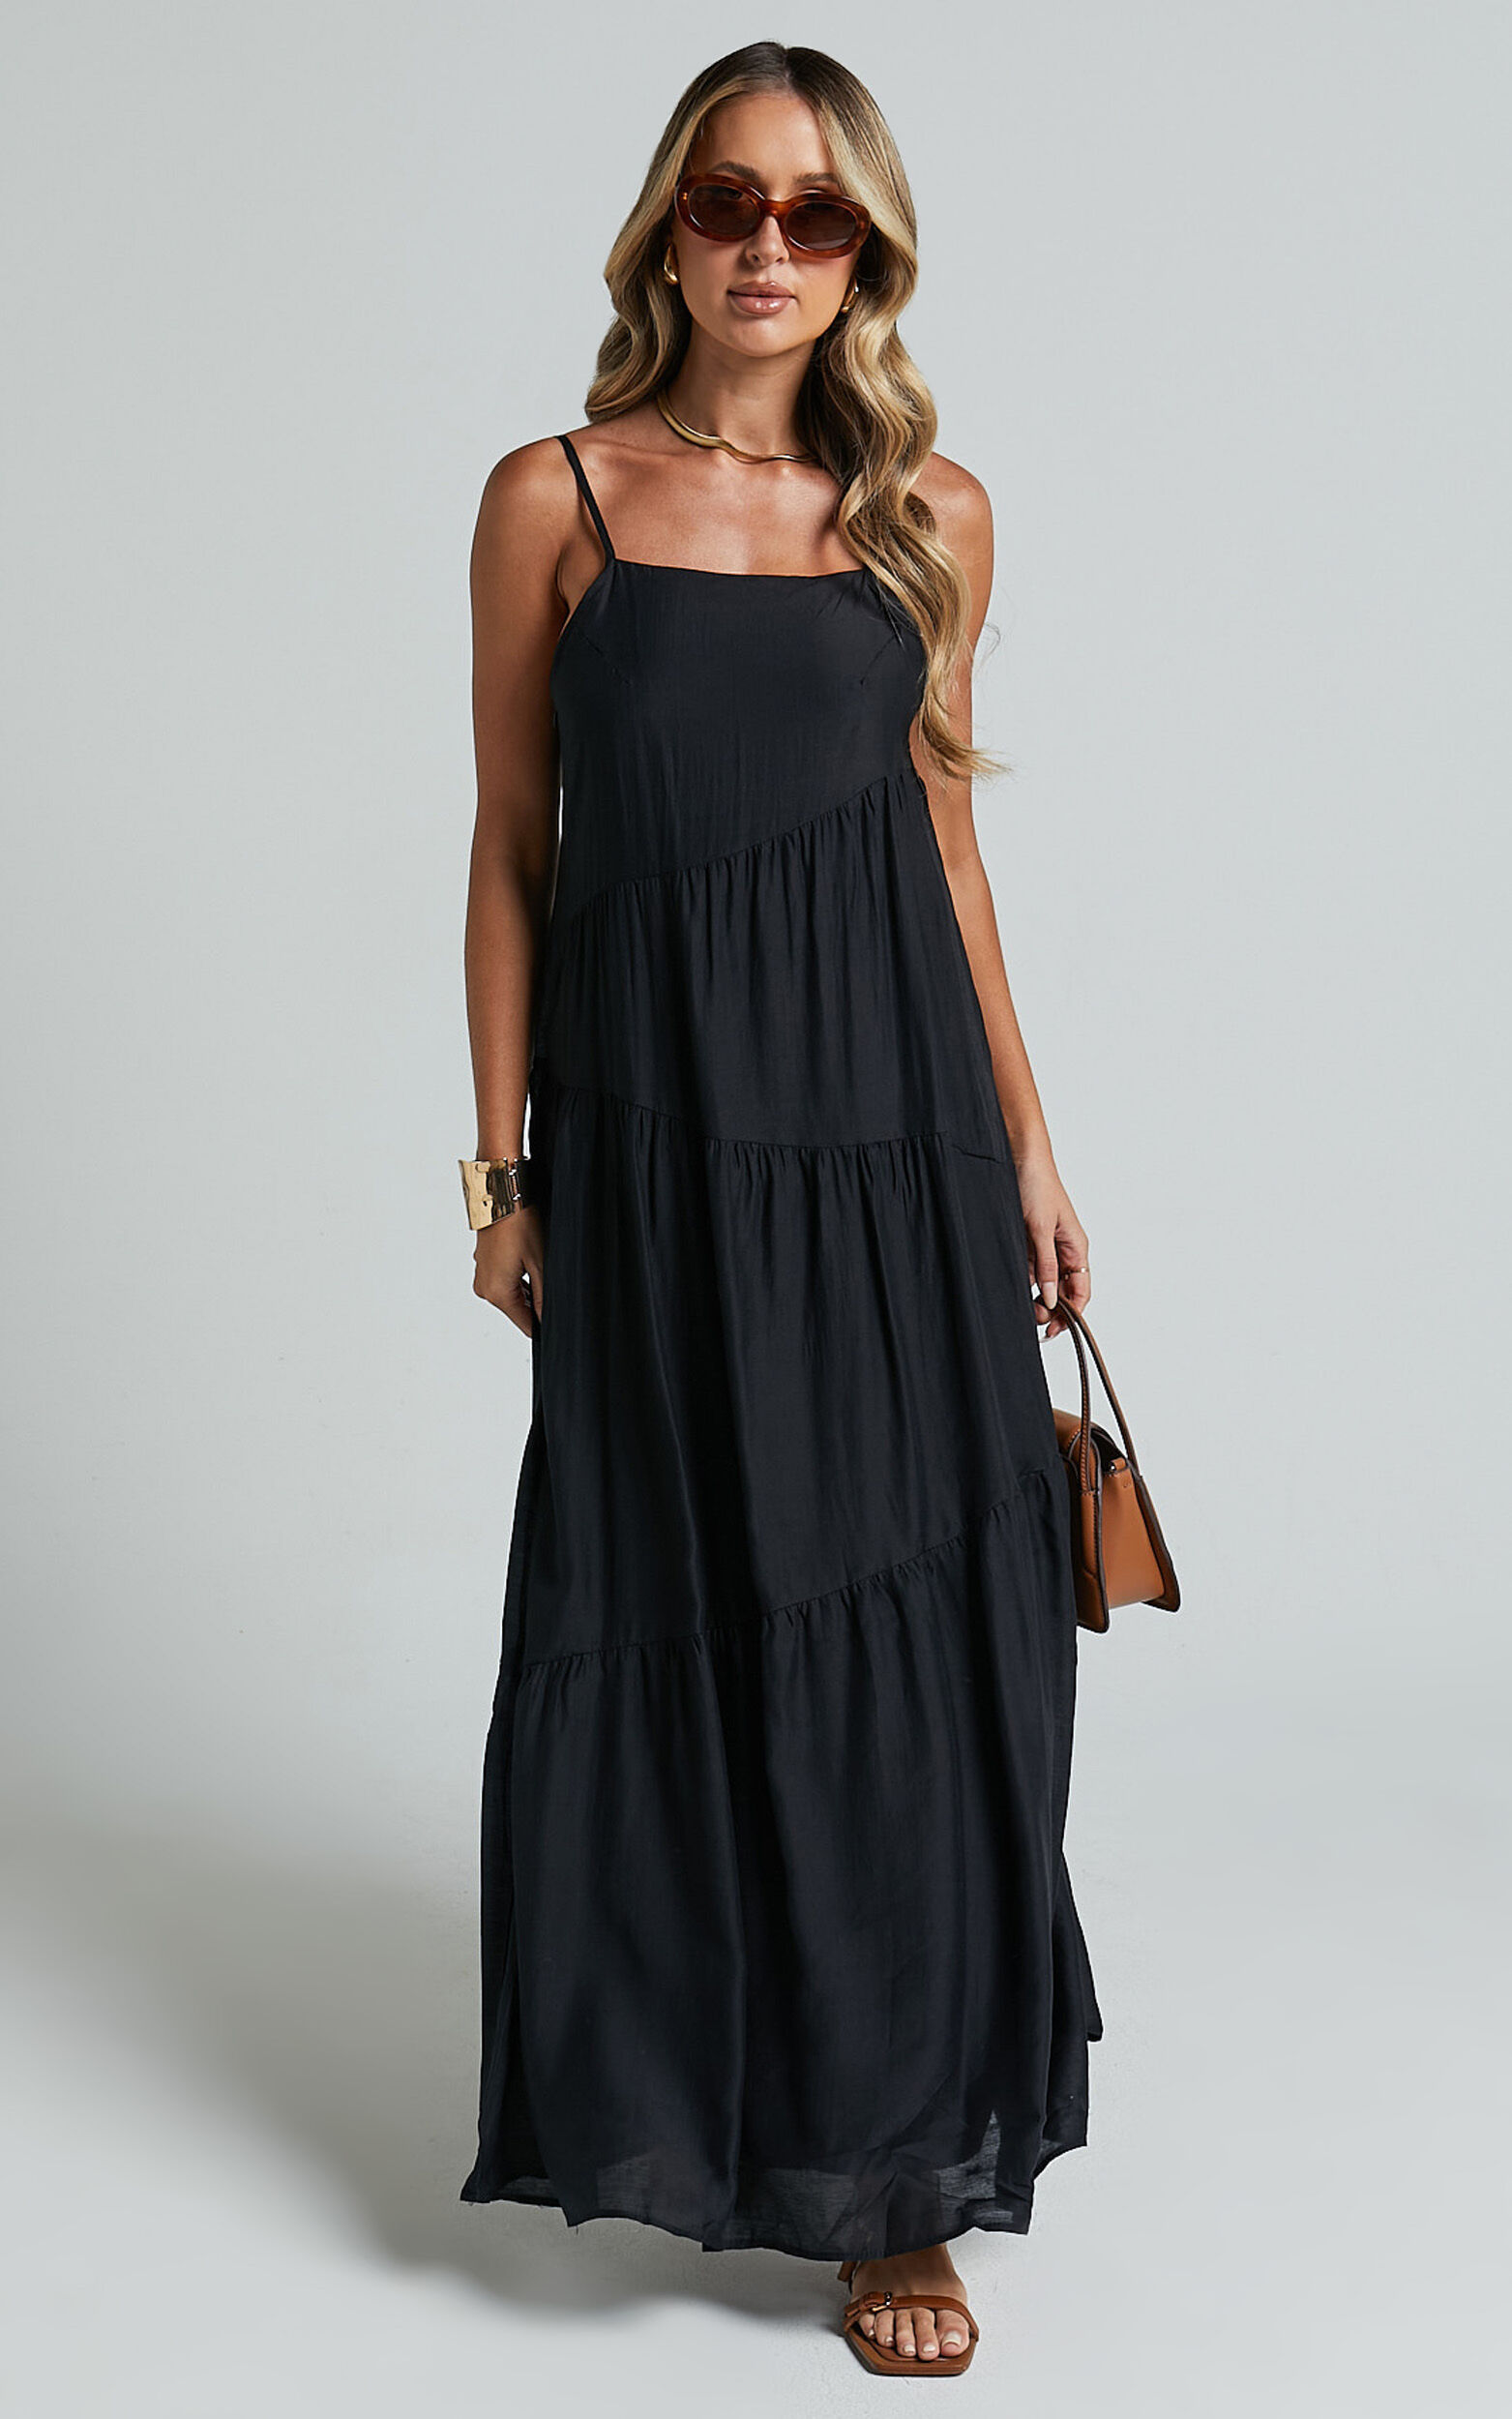 Cecila Midi Dress - Straight Neckline Sleeveless Dress in Black - 06, BLK1